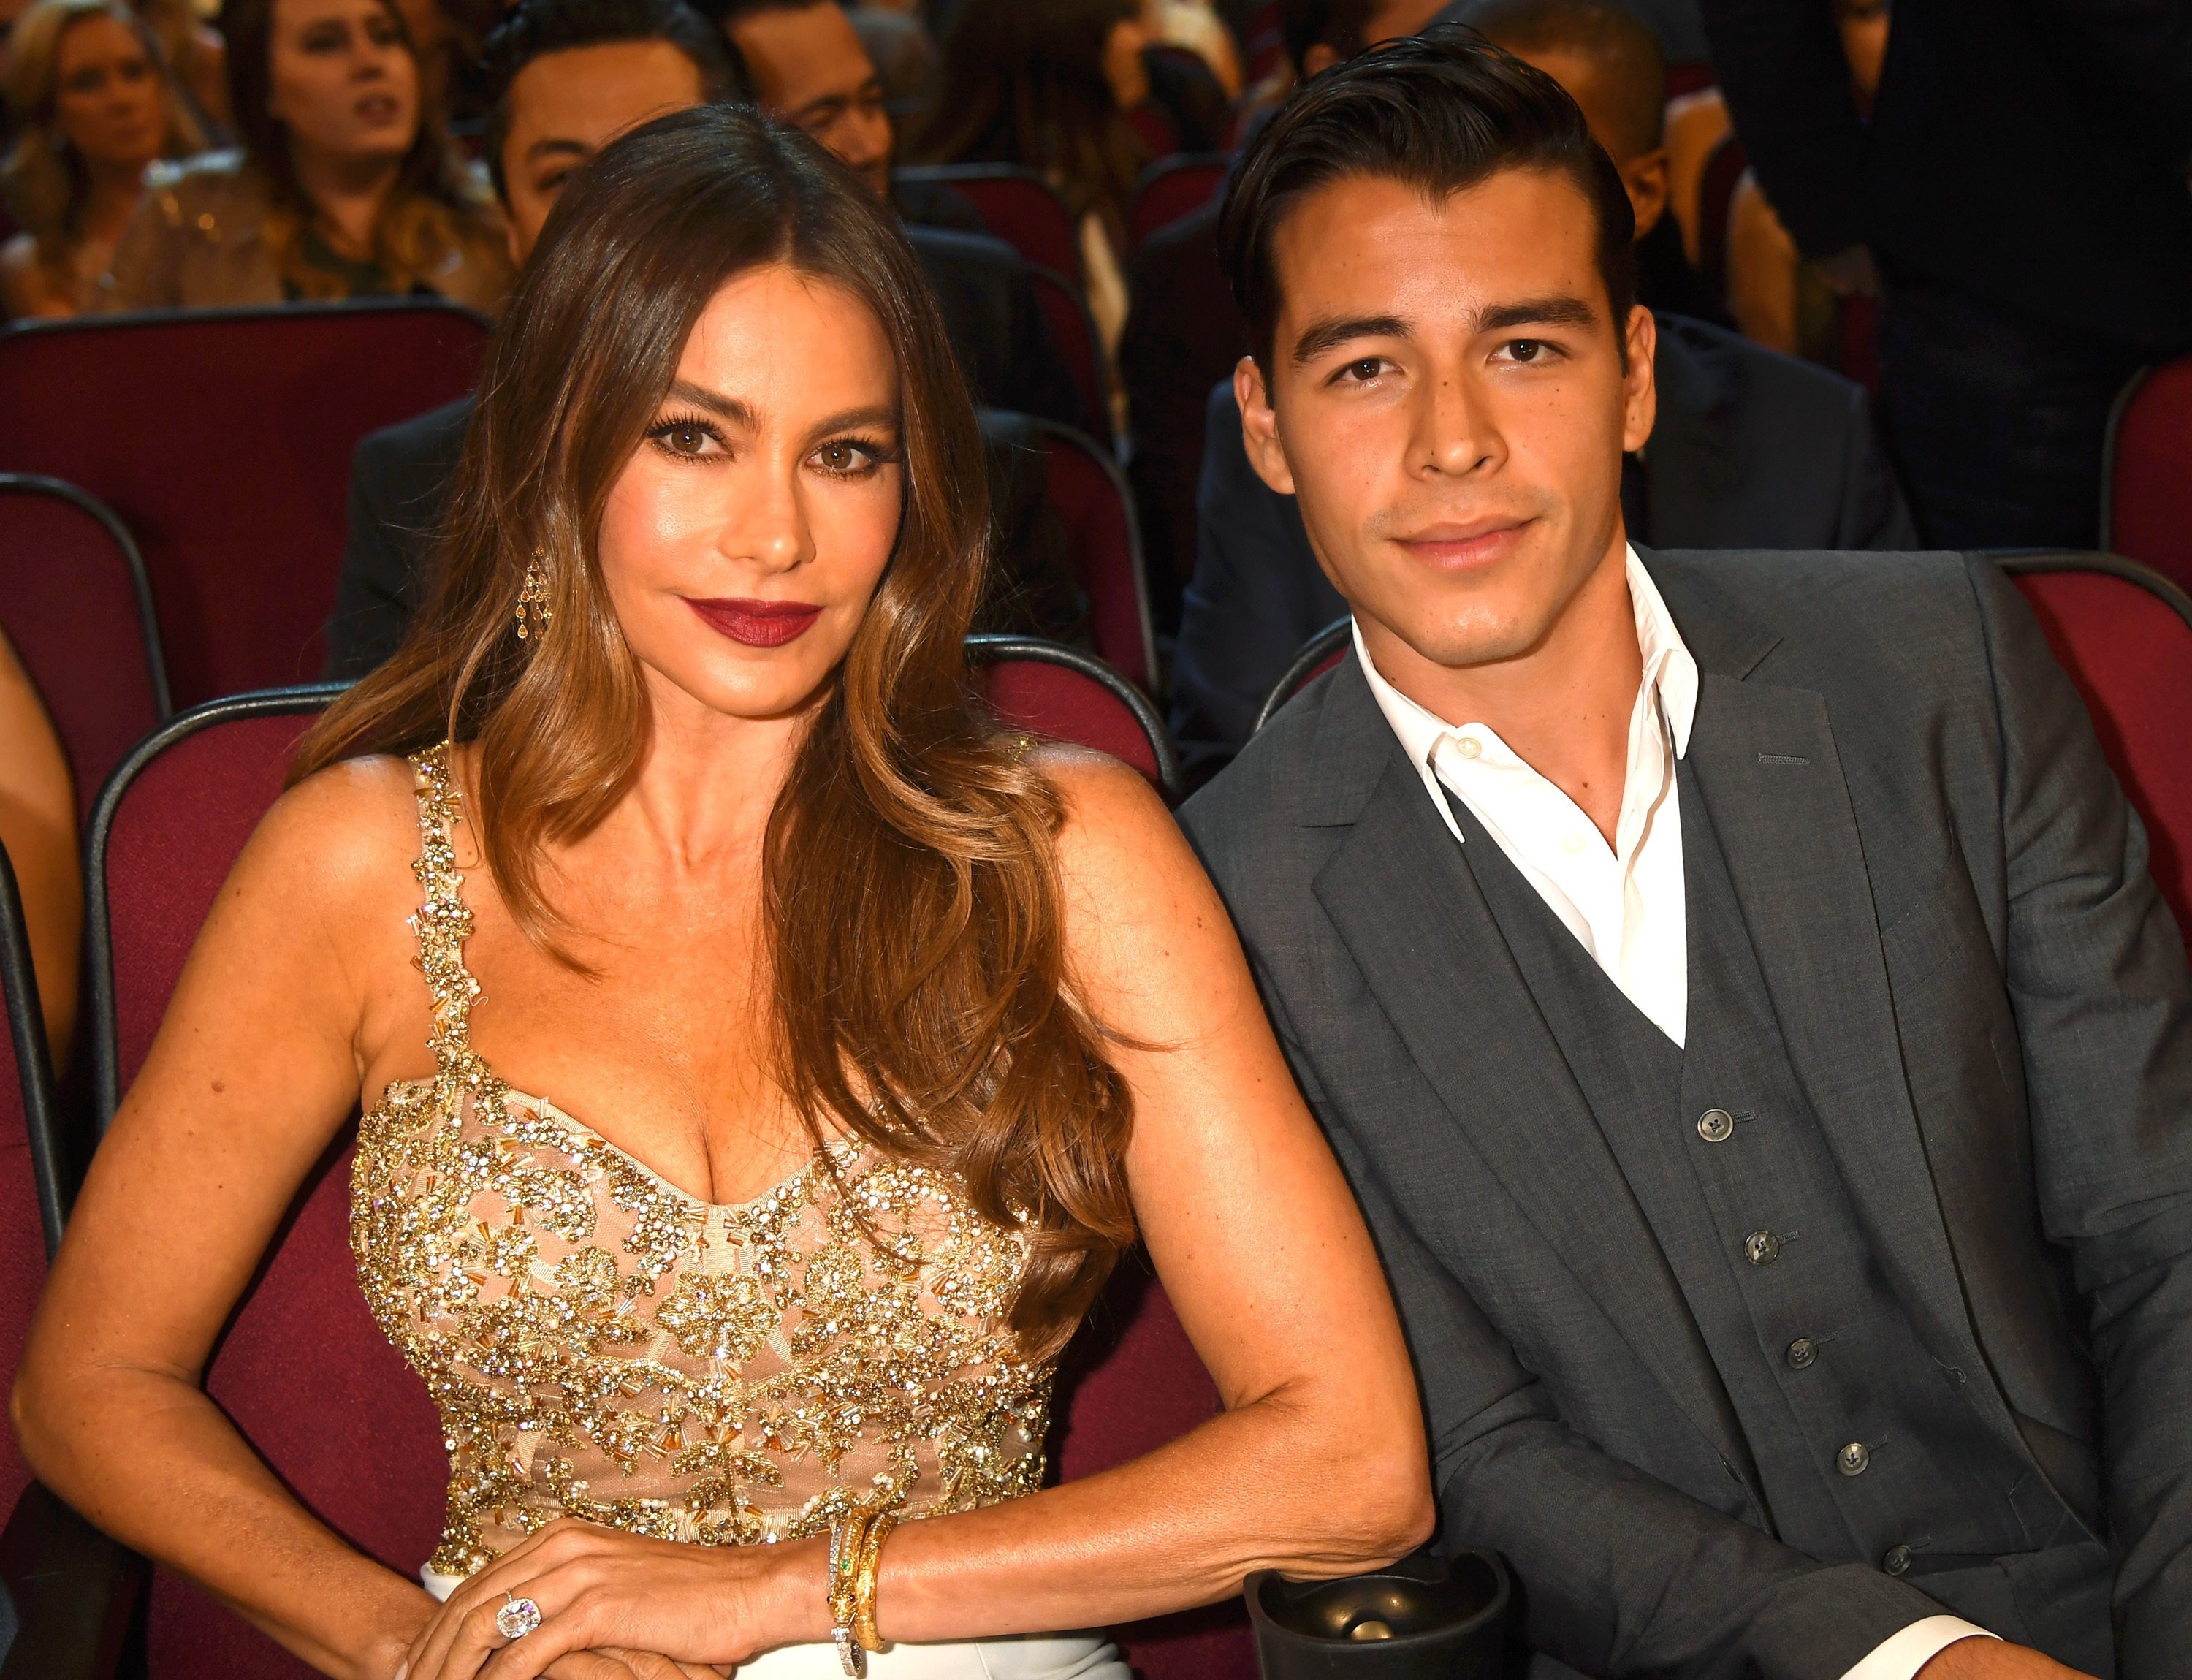 Actress Sofia Vergara and her son Manolo Gonzalez Vergara at the People’s Choice Awards in 2017. Photo: FilmMagic